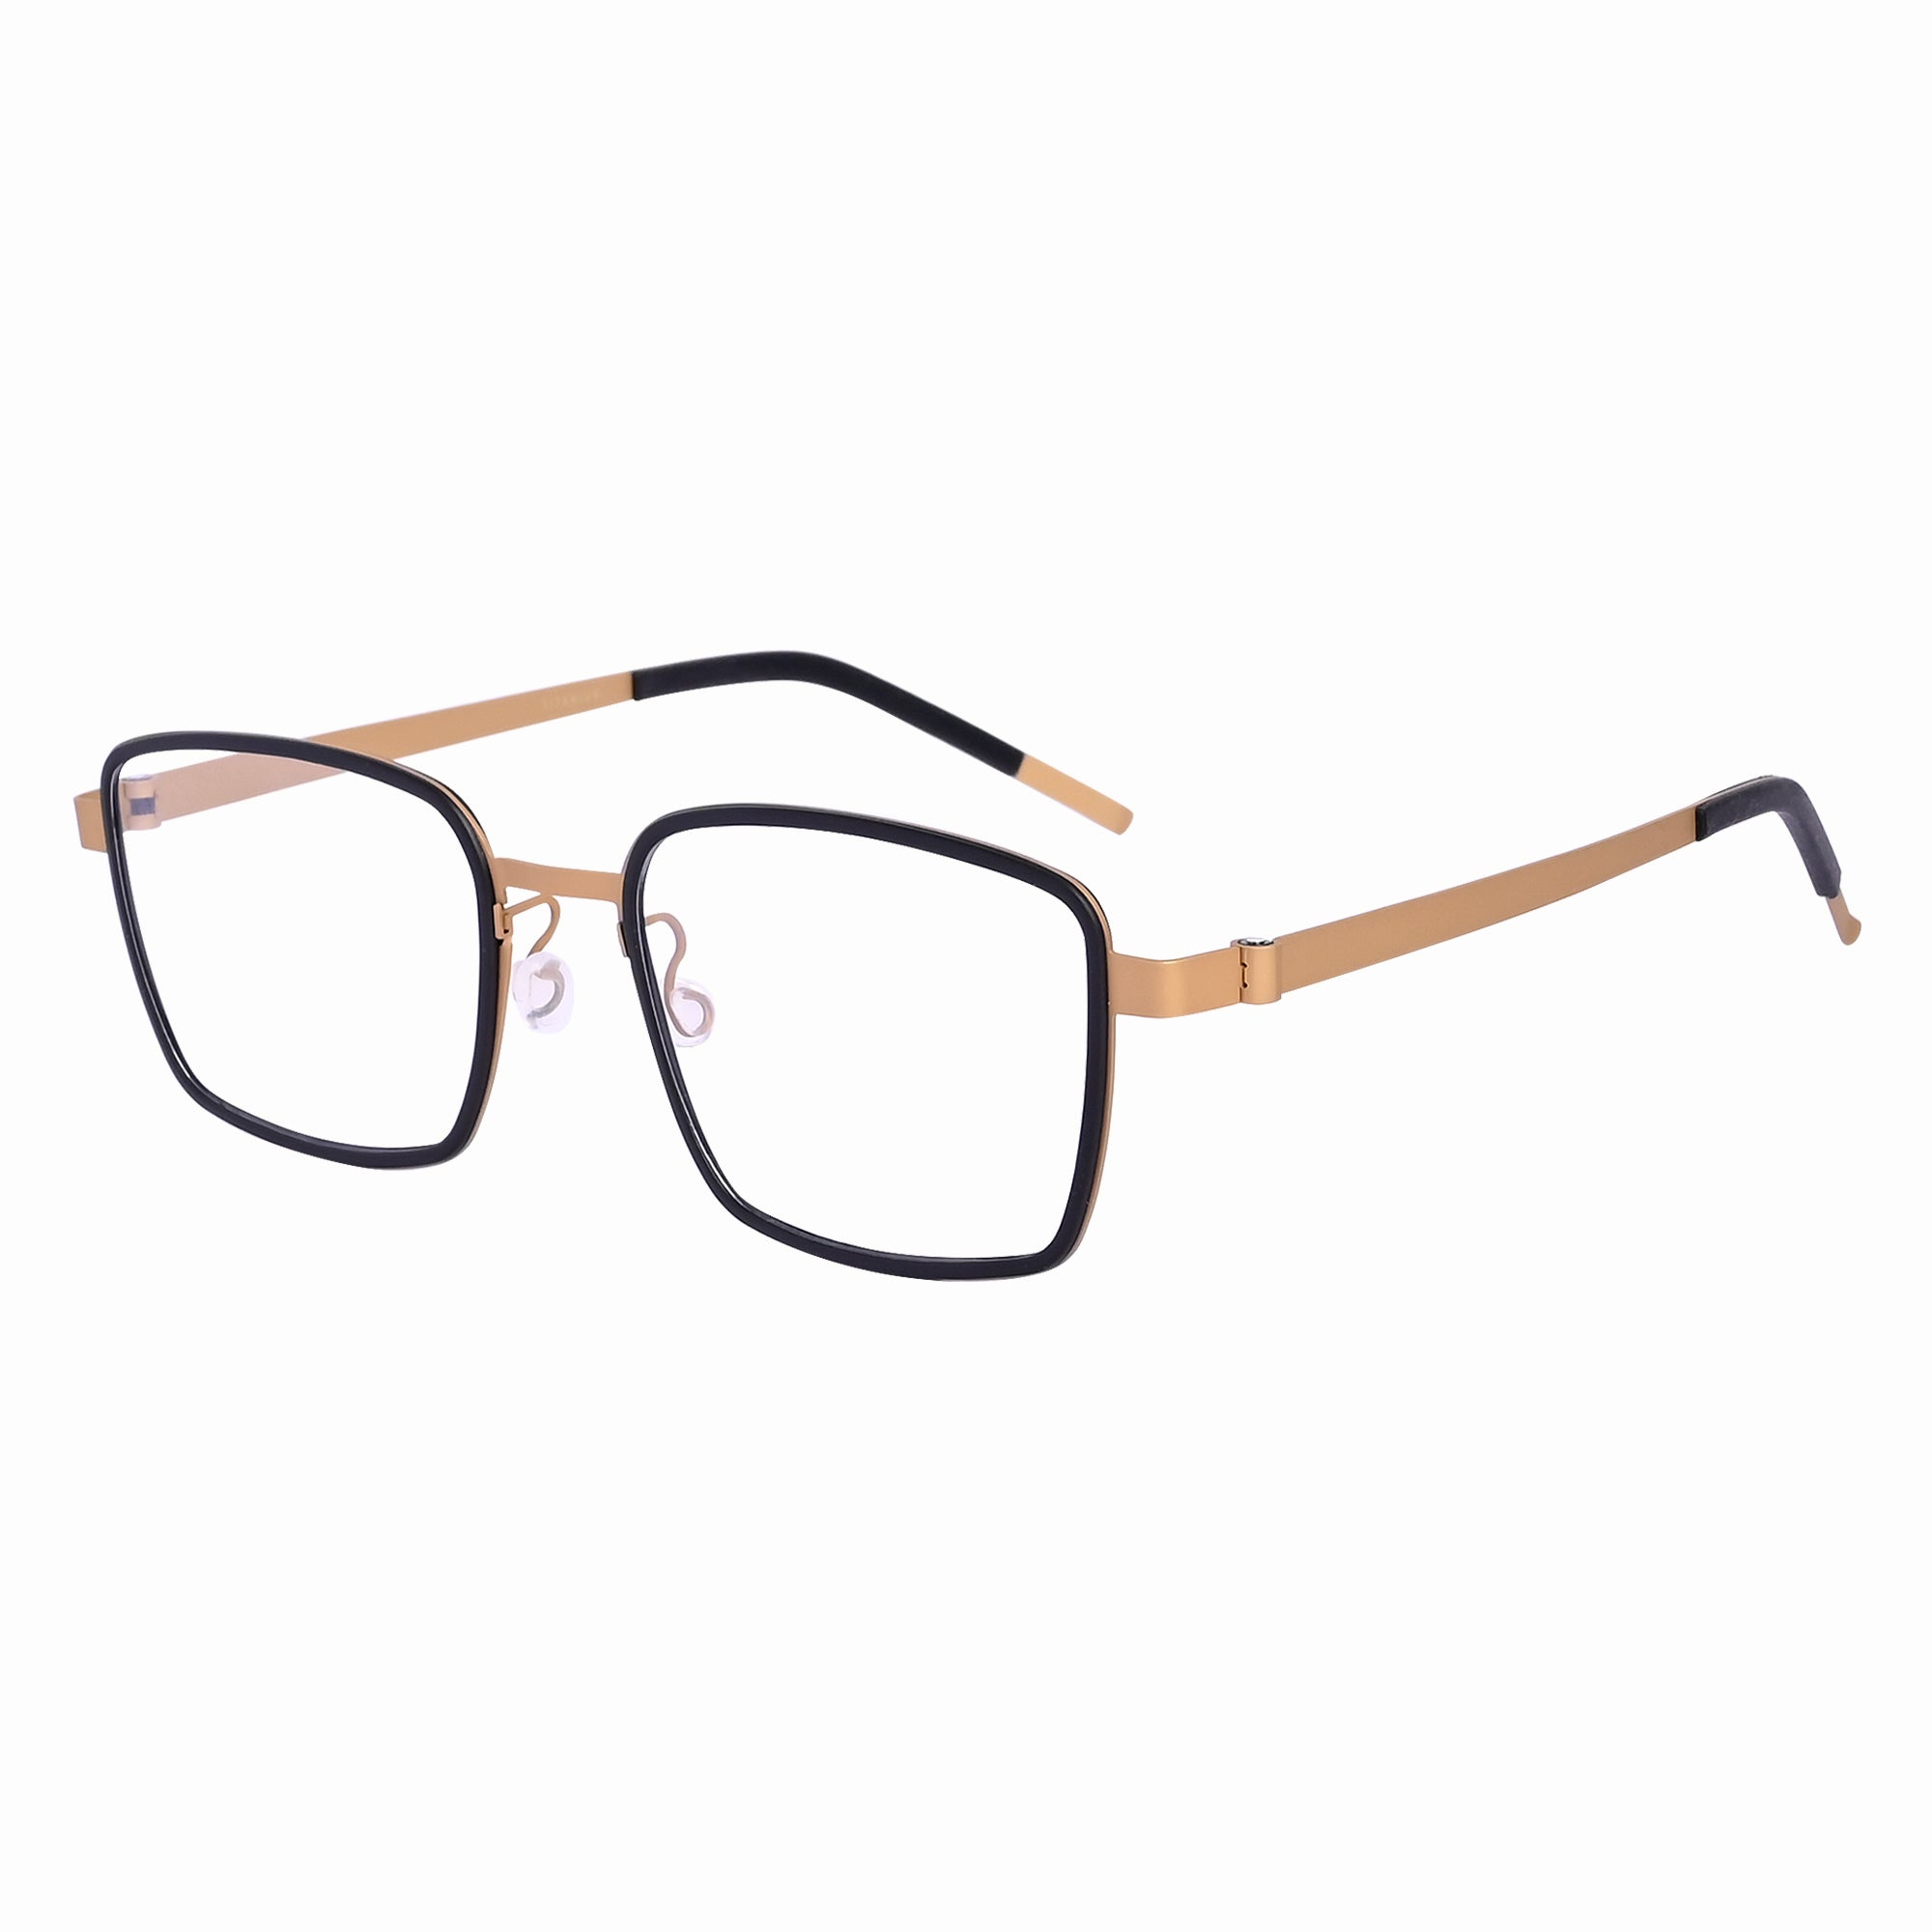 Gold & Black Round Titanium Eyeglasses - LG-001 GBL